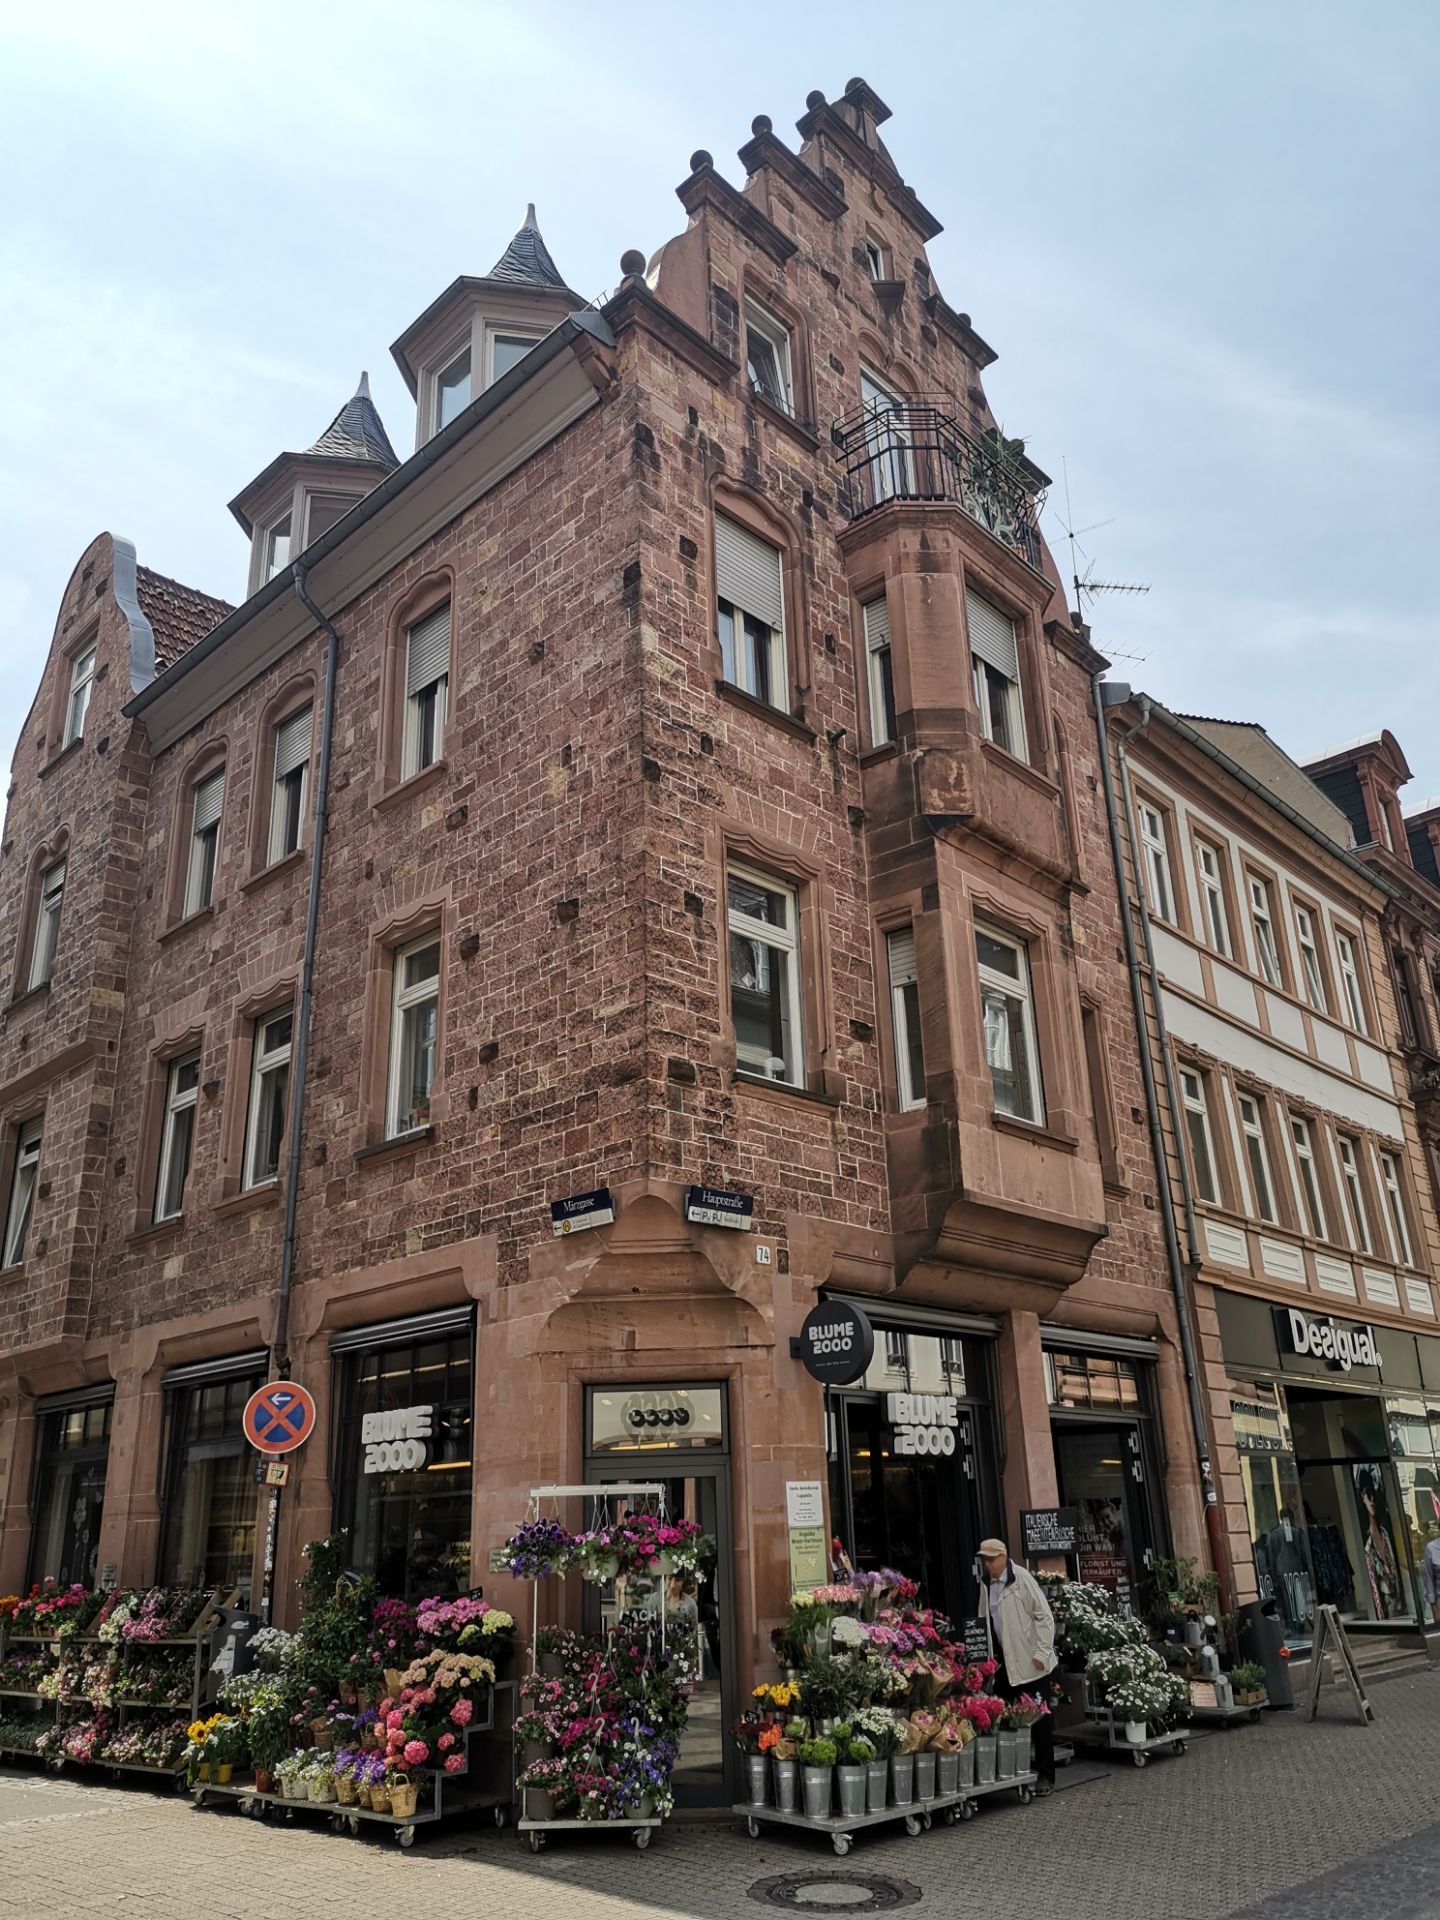 Heidelberg University Attractions - Heidelberg Travel Review -Travel Guide  - Trip.com